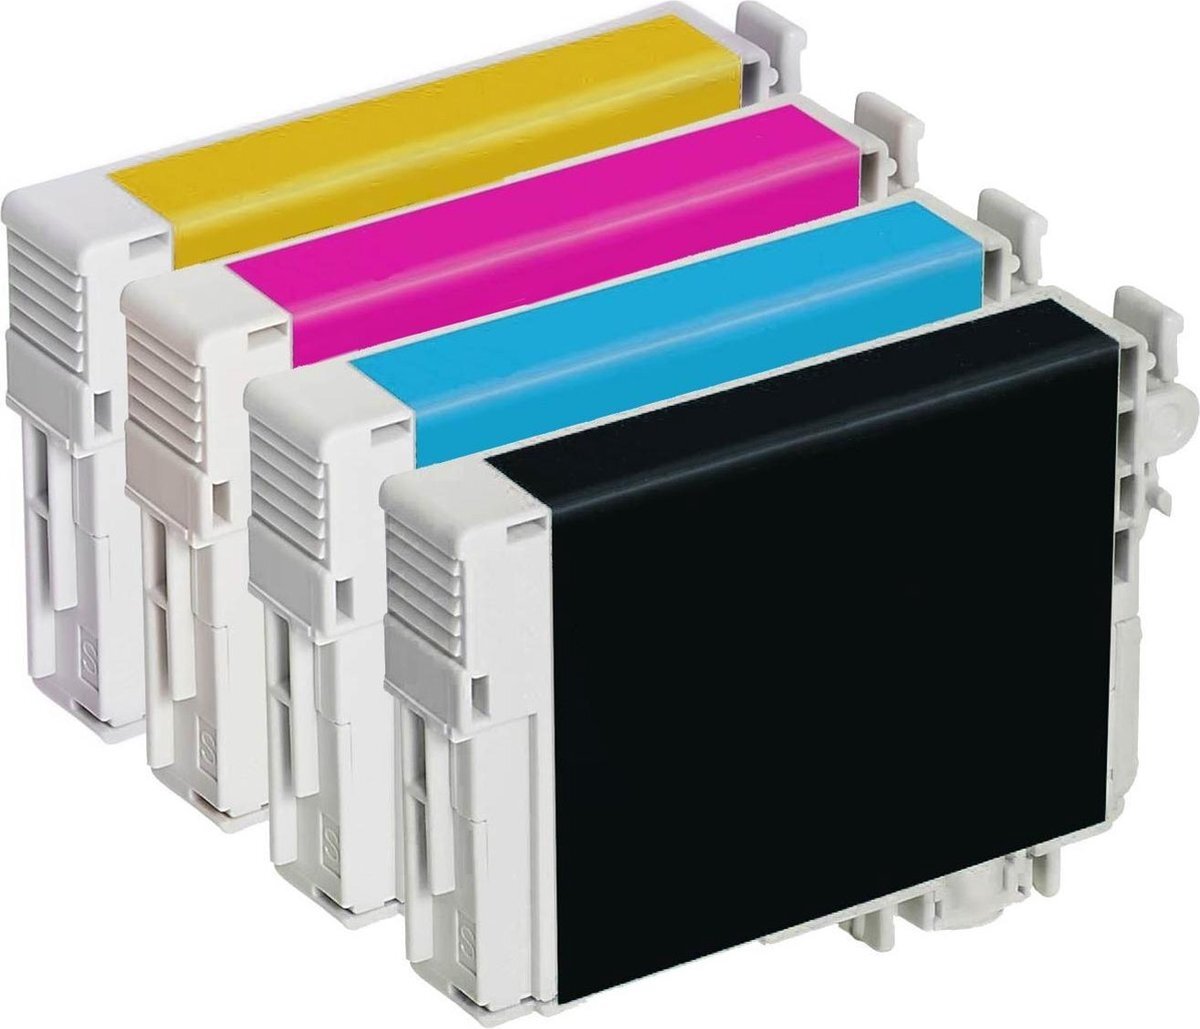 InktDL Compatible inkt cartridges voor Epson T0715| Multipack van 4 cartridges voor Epson Stylus D120, S20, S21, SX100, SX105, SX110, SX115, SX200, SX205, SX210, SX215, SX218, SX400, SX405, SX410, SX415, SX510W, SX600FW, SX610 (T0711, T0712, T0713, T0714)